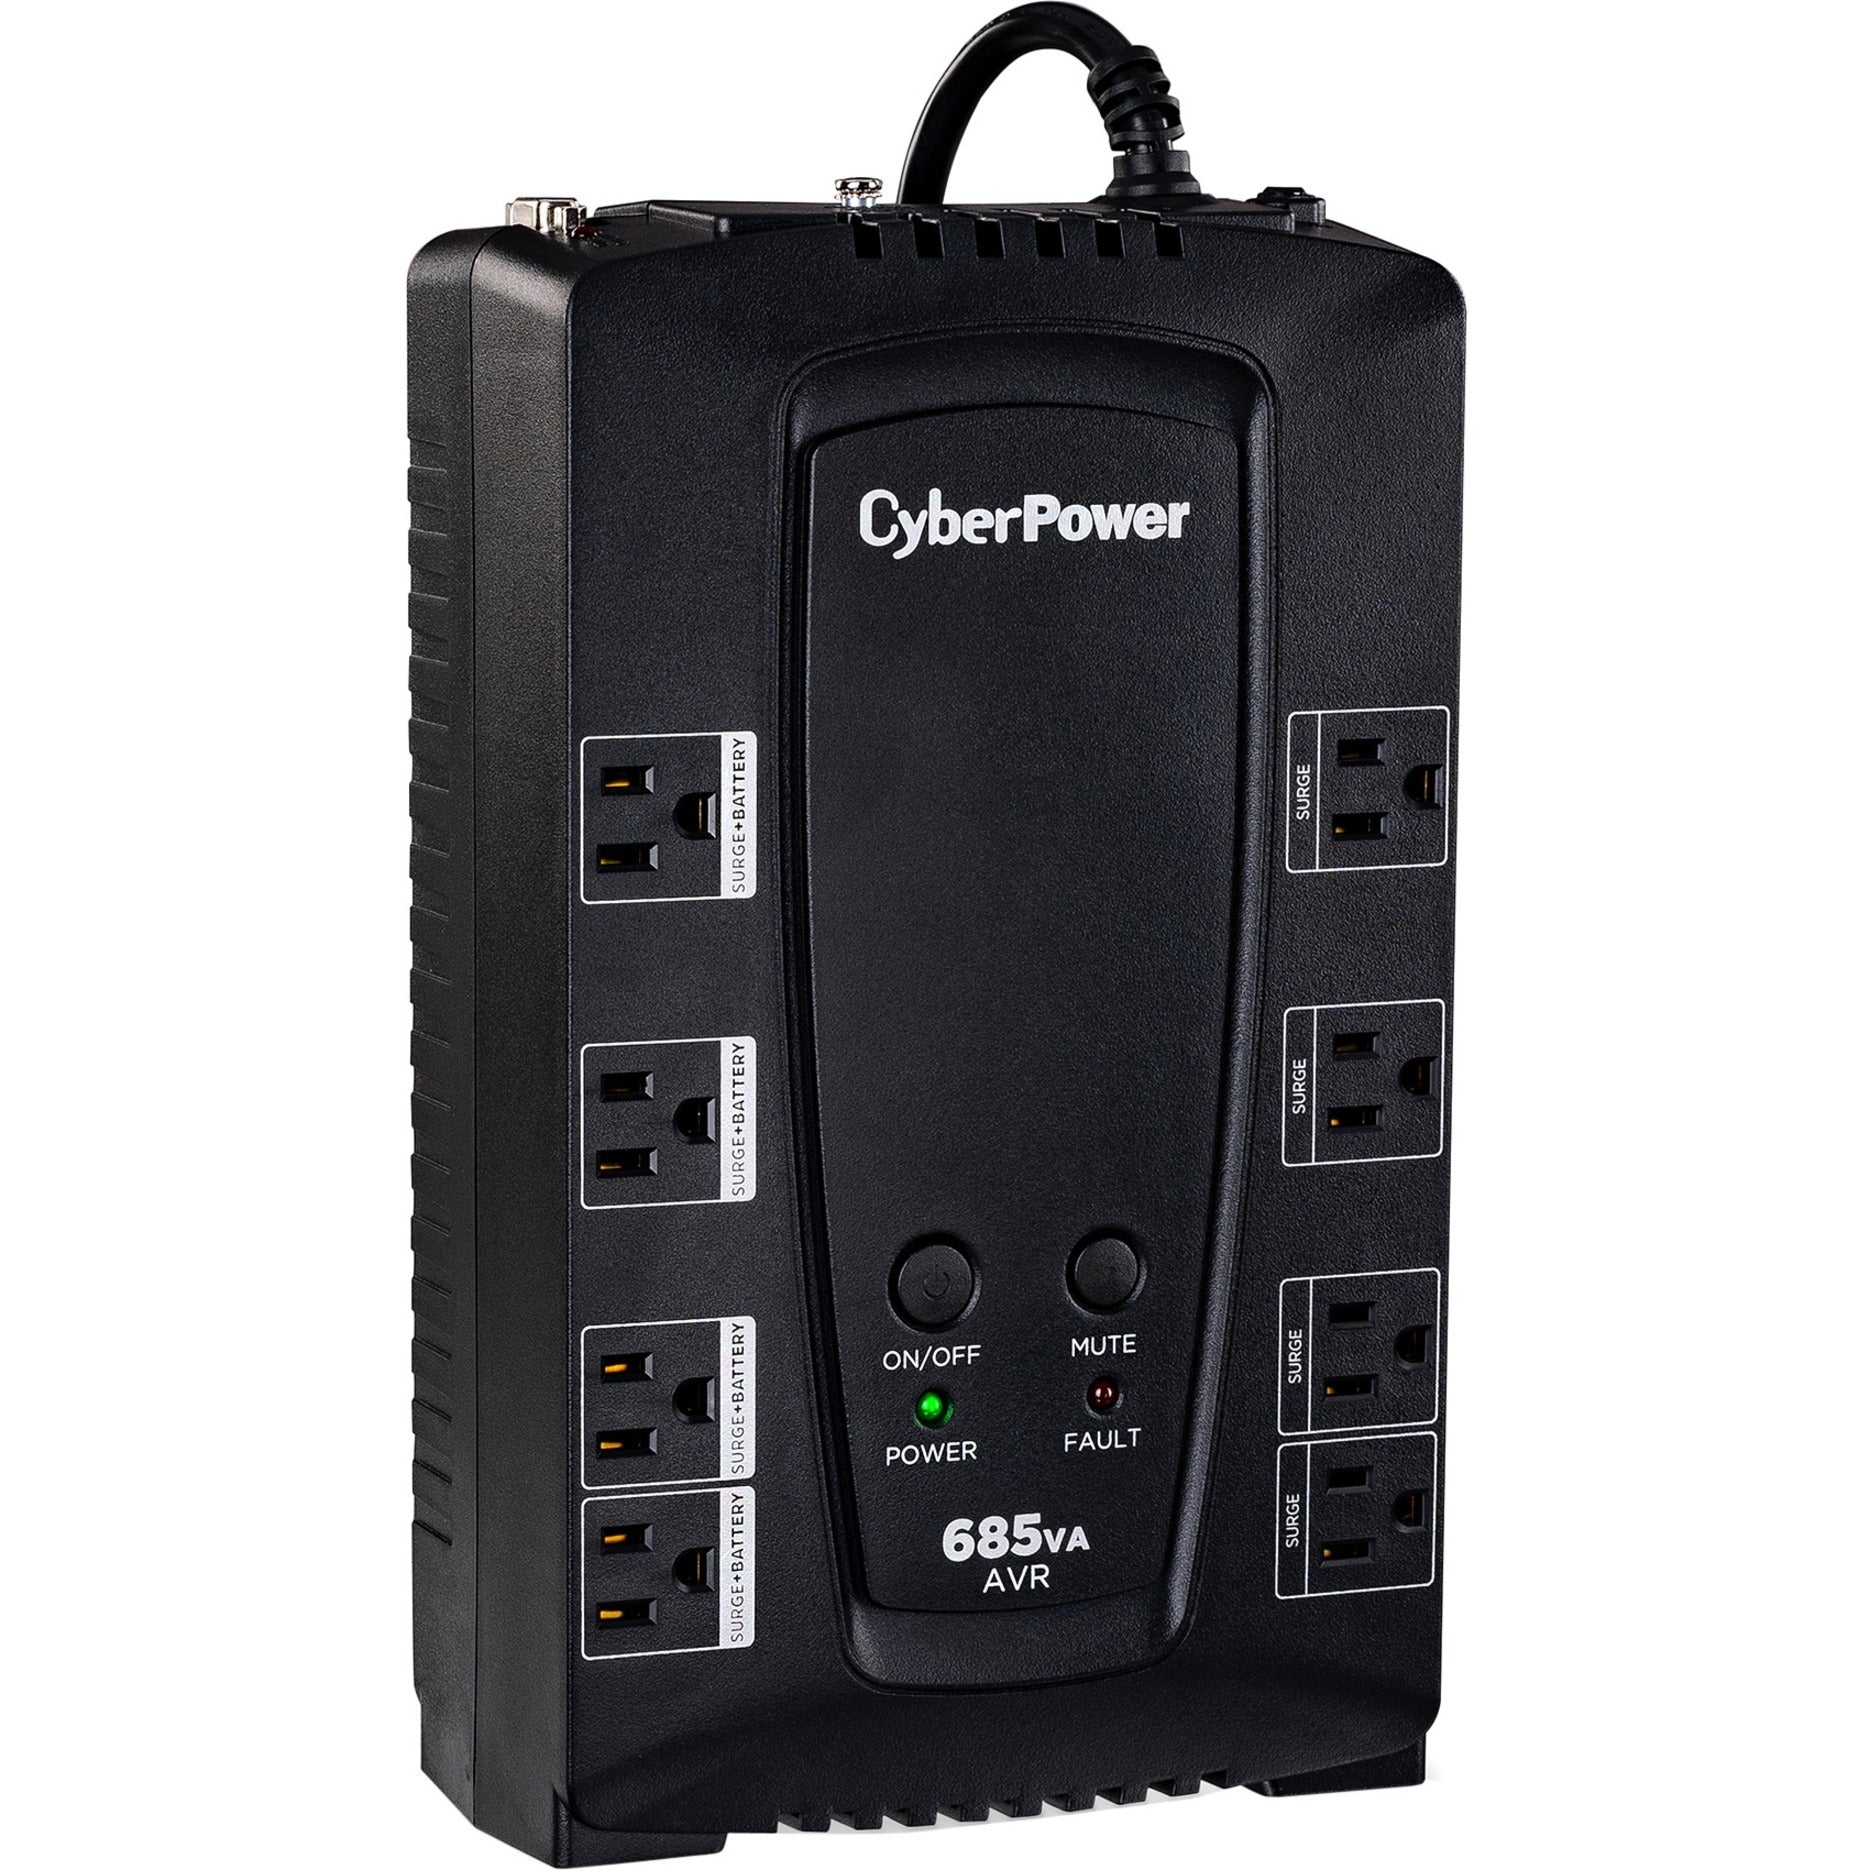 CyberPower CP685AVRG AVR UPS Series, 685 VA Battery Backup